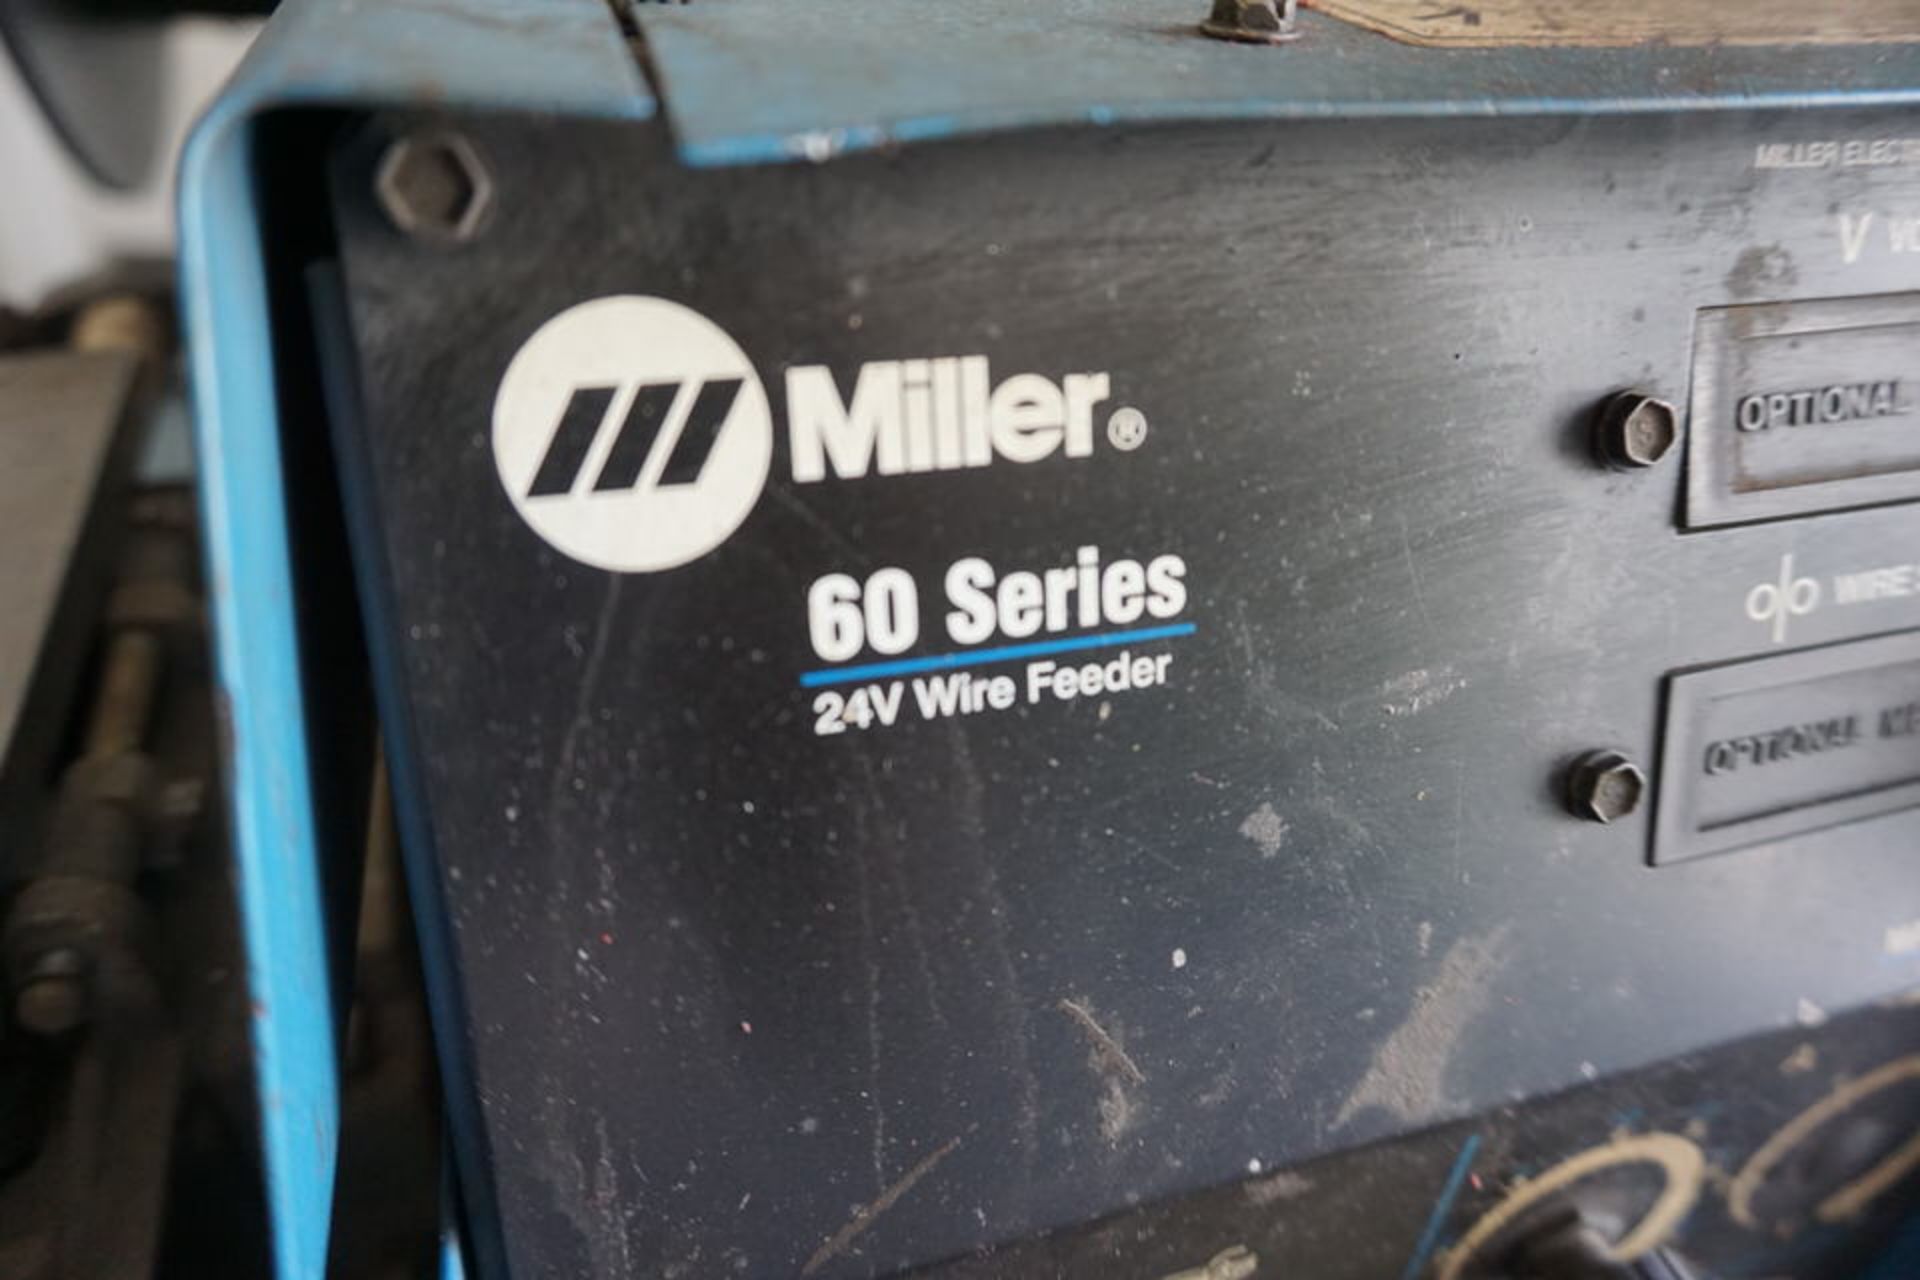 Miller Deltaweld 452 Welding Power Source w/ Miller 60 Serie Wire Feeder, 220V, 3PH - Image 5 of 7